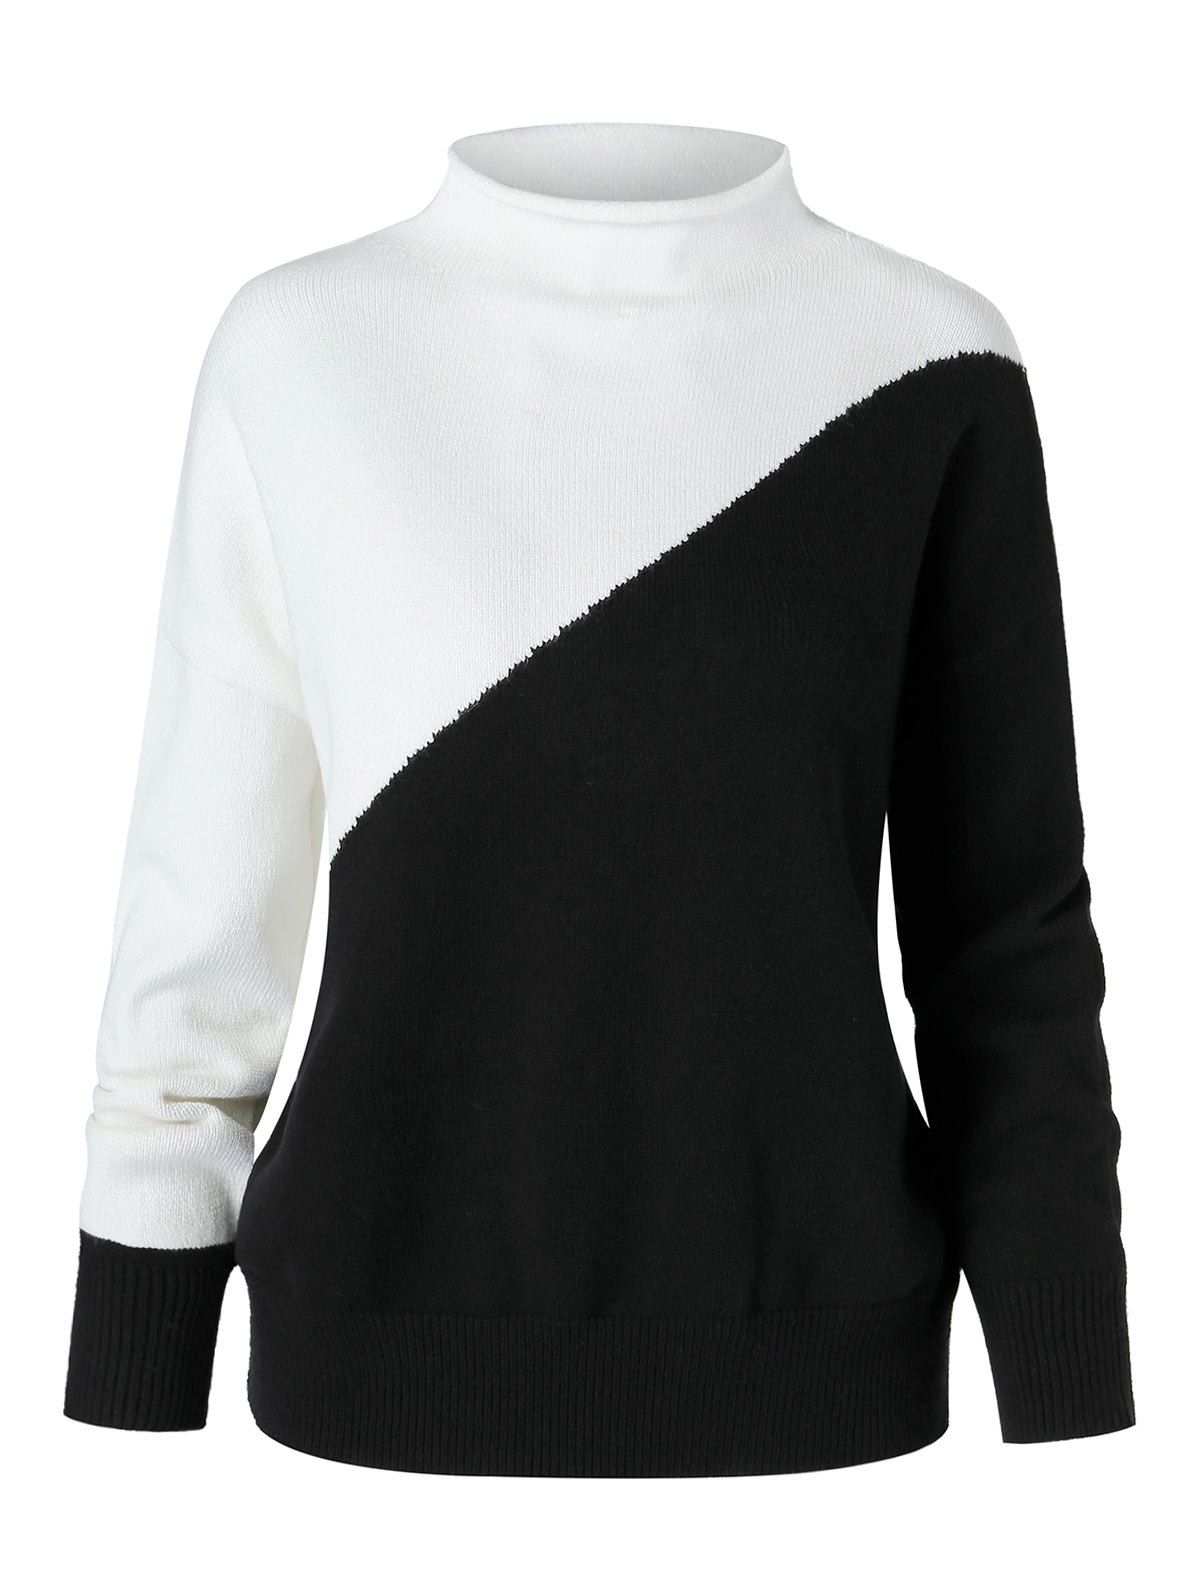 Plus Size Bicolor Two Tone Mock Neck Sweater - BLACK 4X